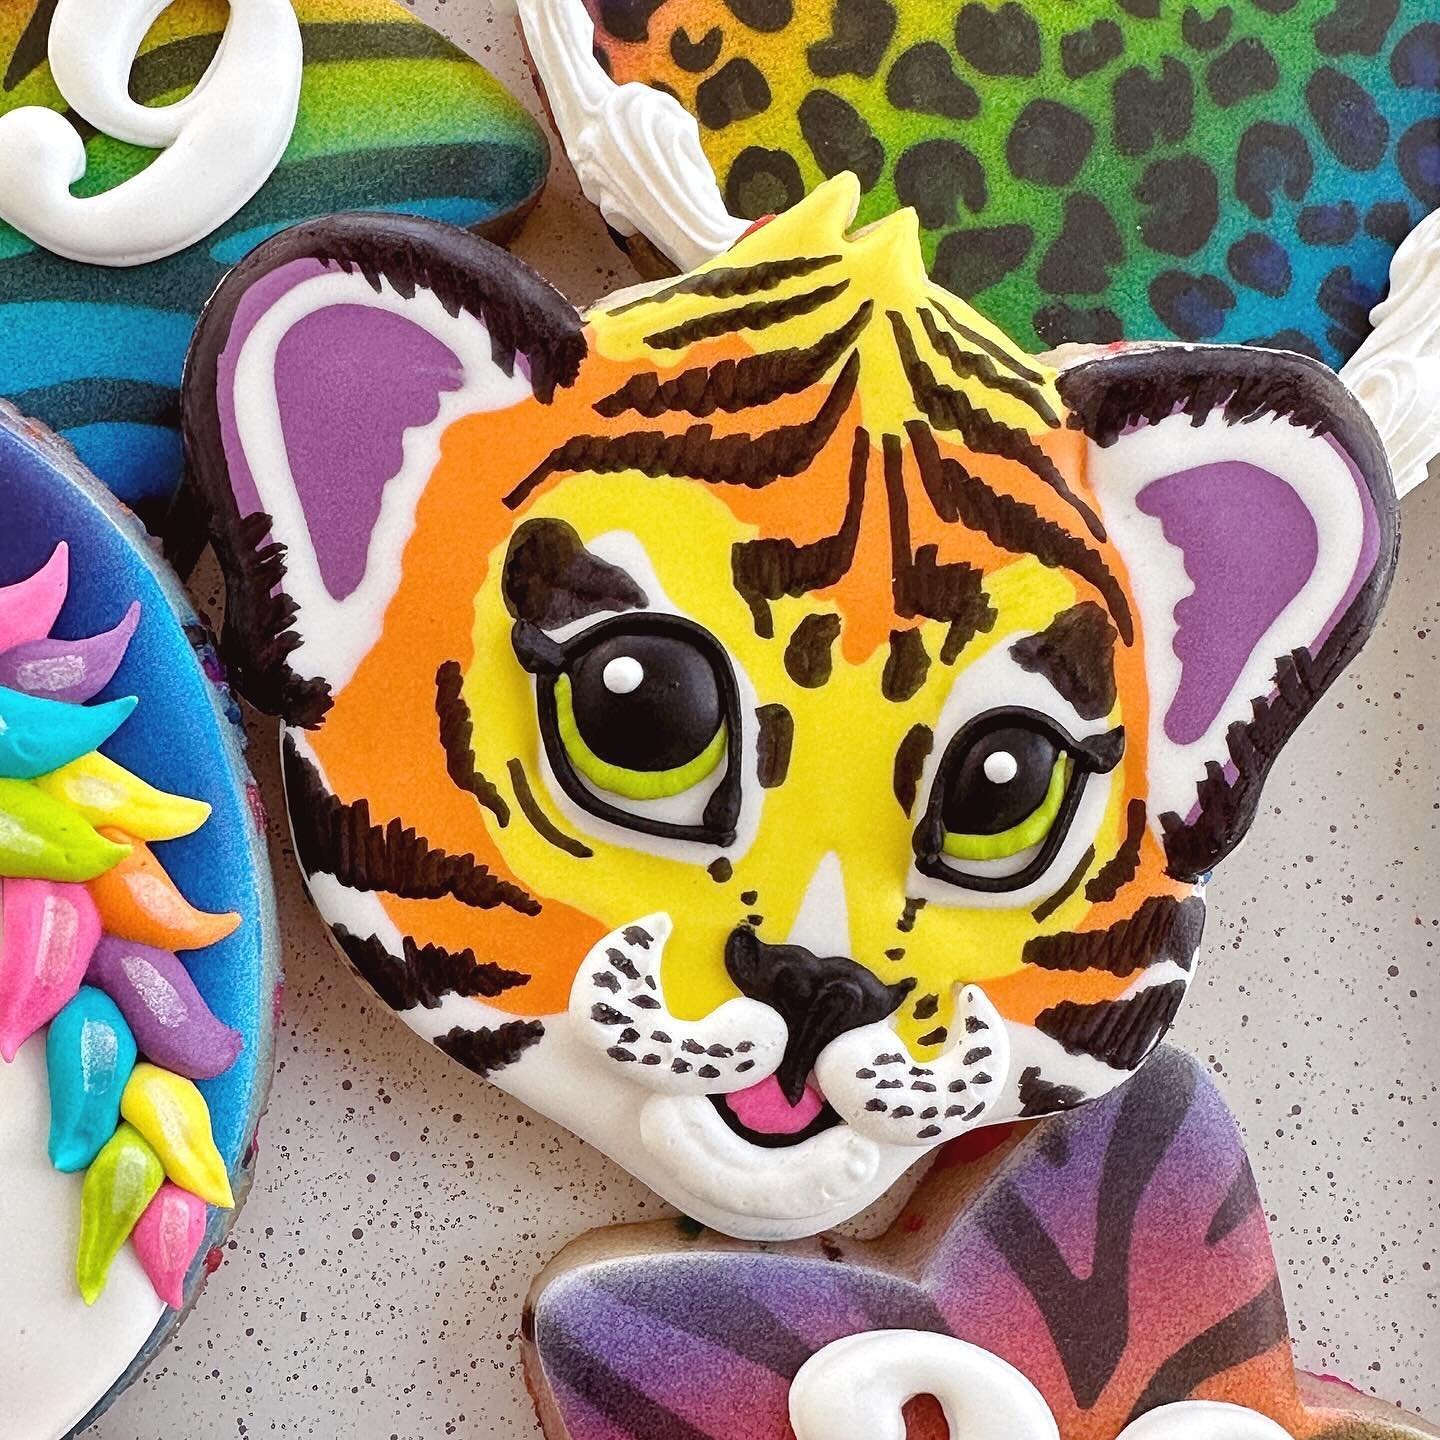 The #lisafrank closeups ❤️🧡💛💚💙💜

#lisafrankcookies #customcookiesatlanta #atlcookies #customsugarcookies #birthdaycookies